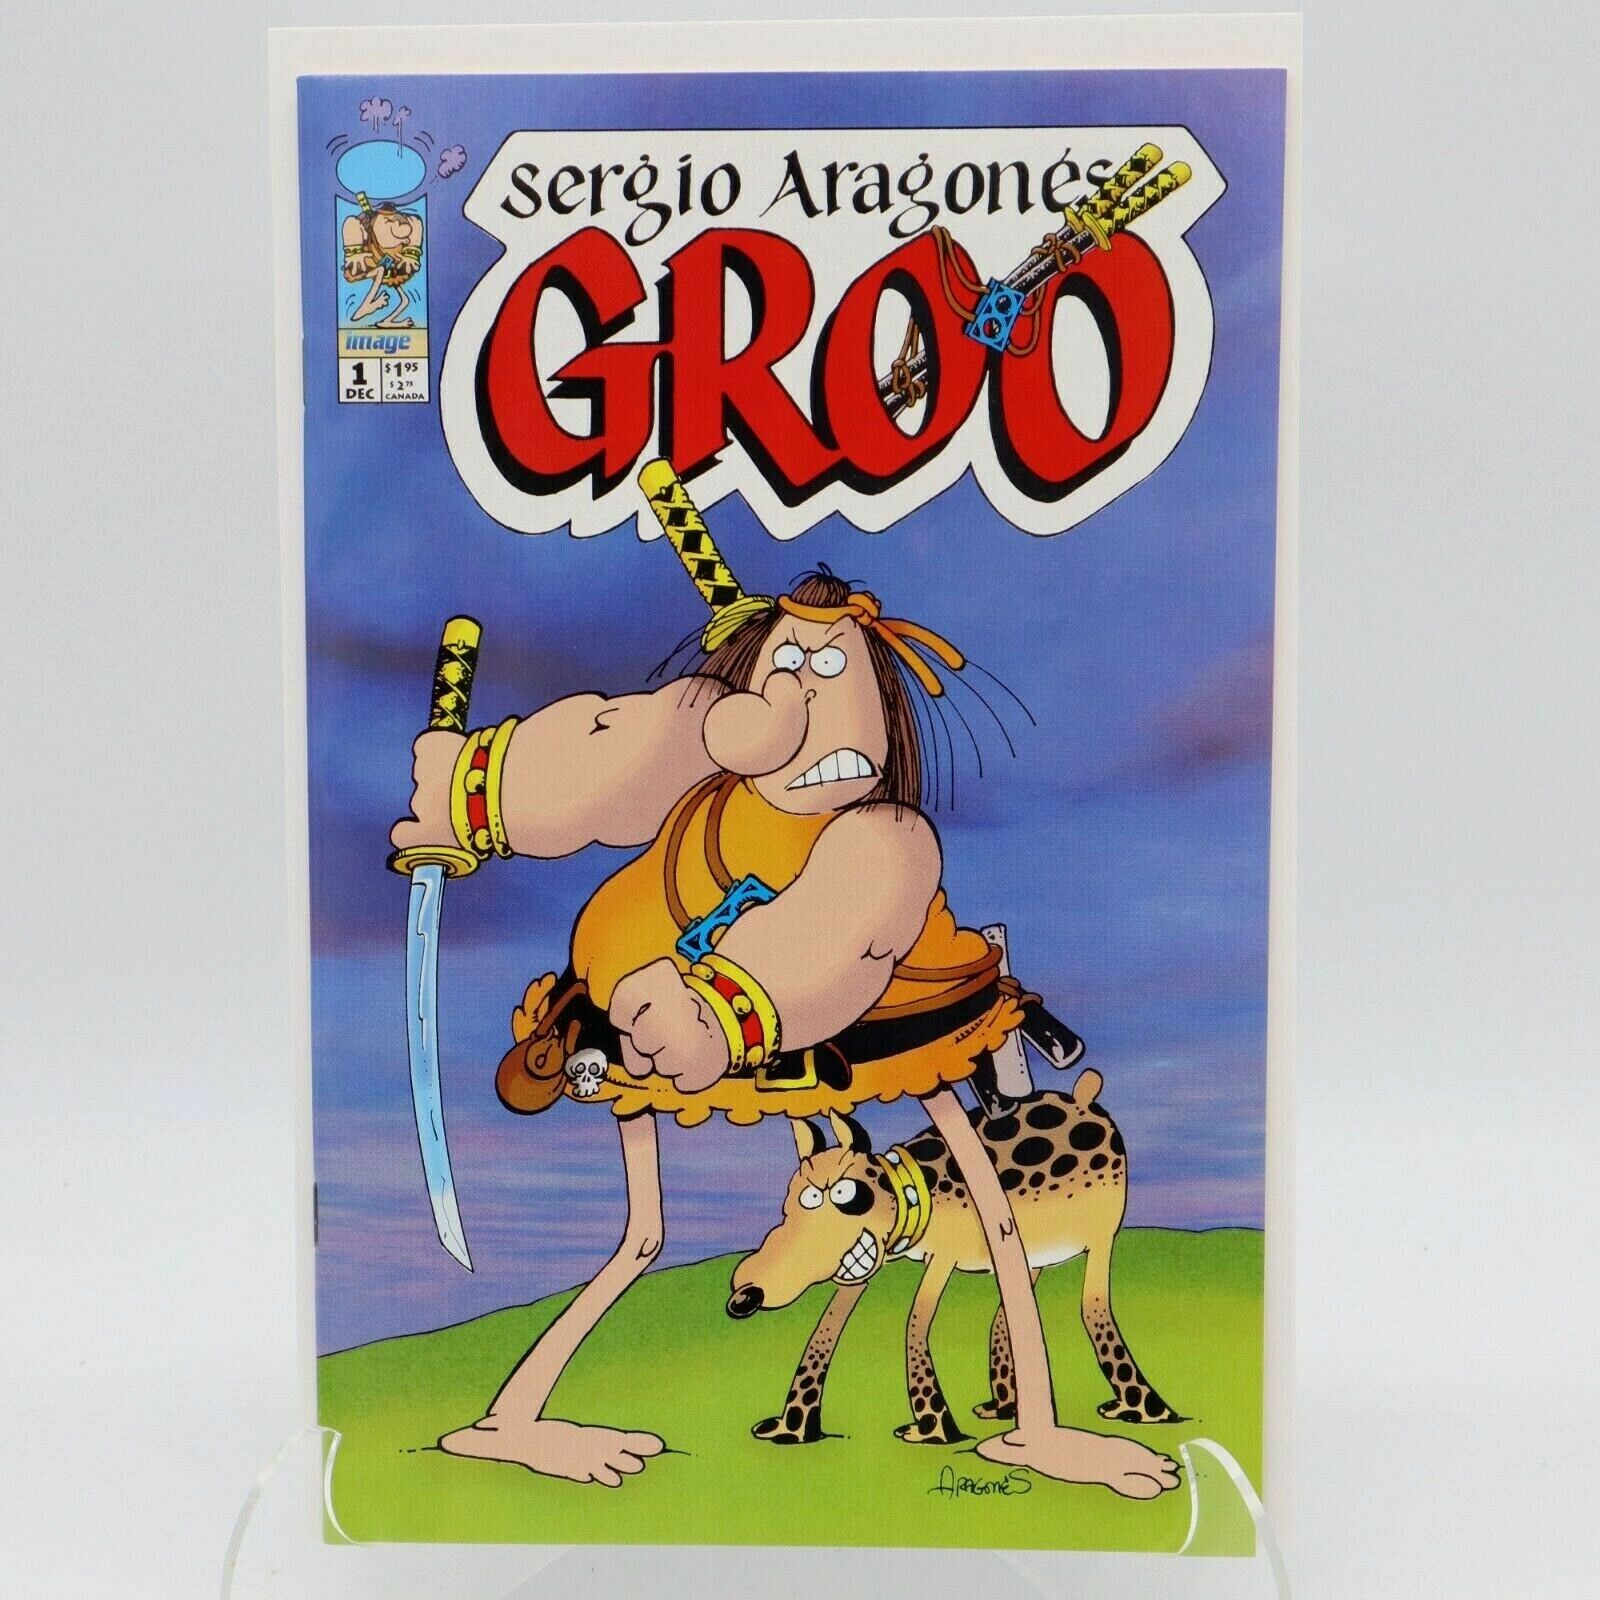 1994 Image Comics GROO #1 First Printing Sergio Aragones a